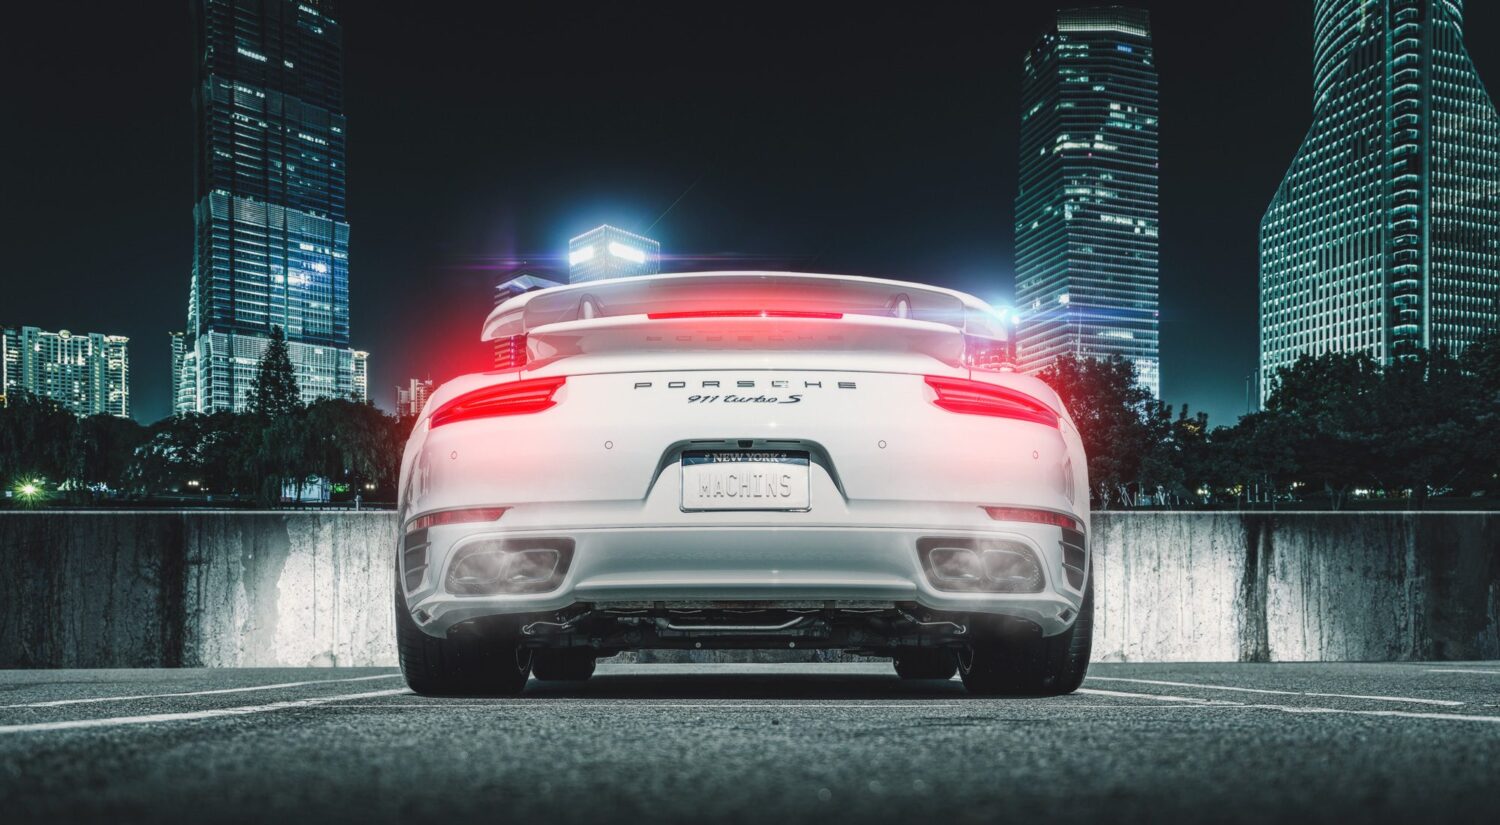 Epic Composite of a Porsche made in Photoshop